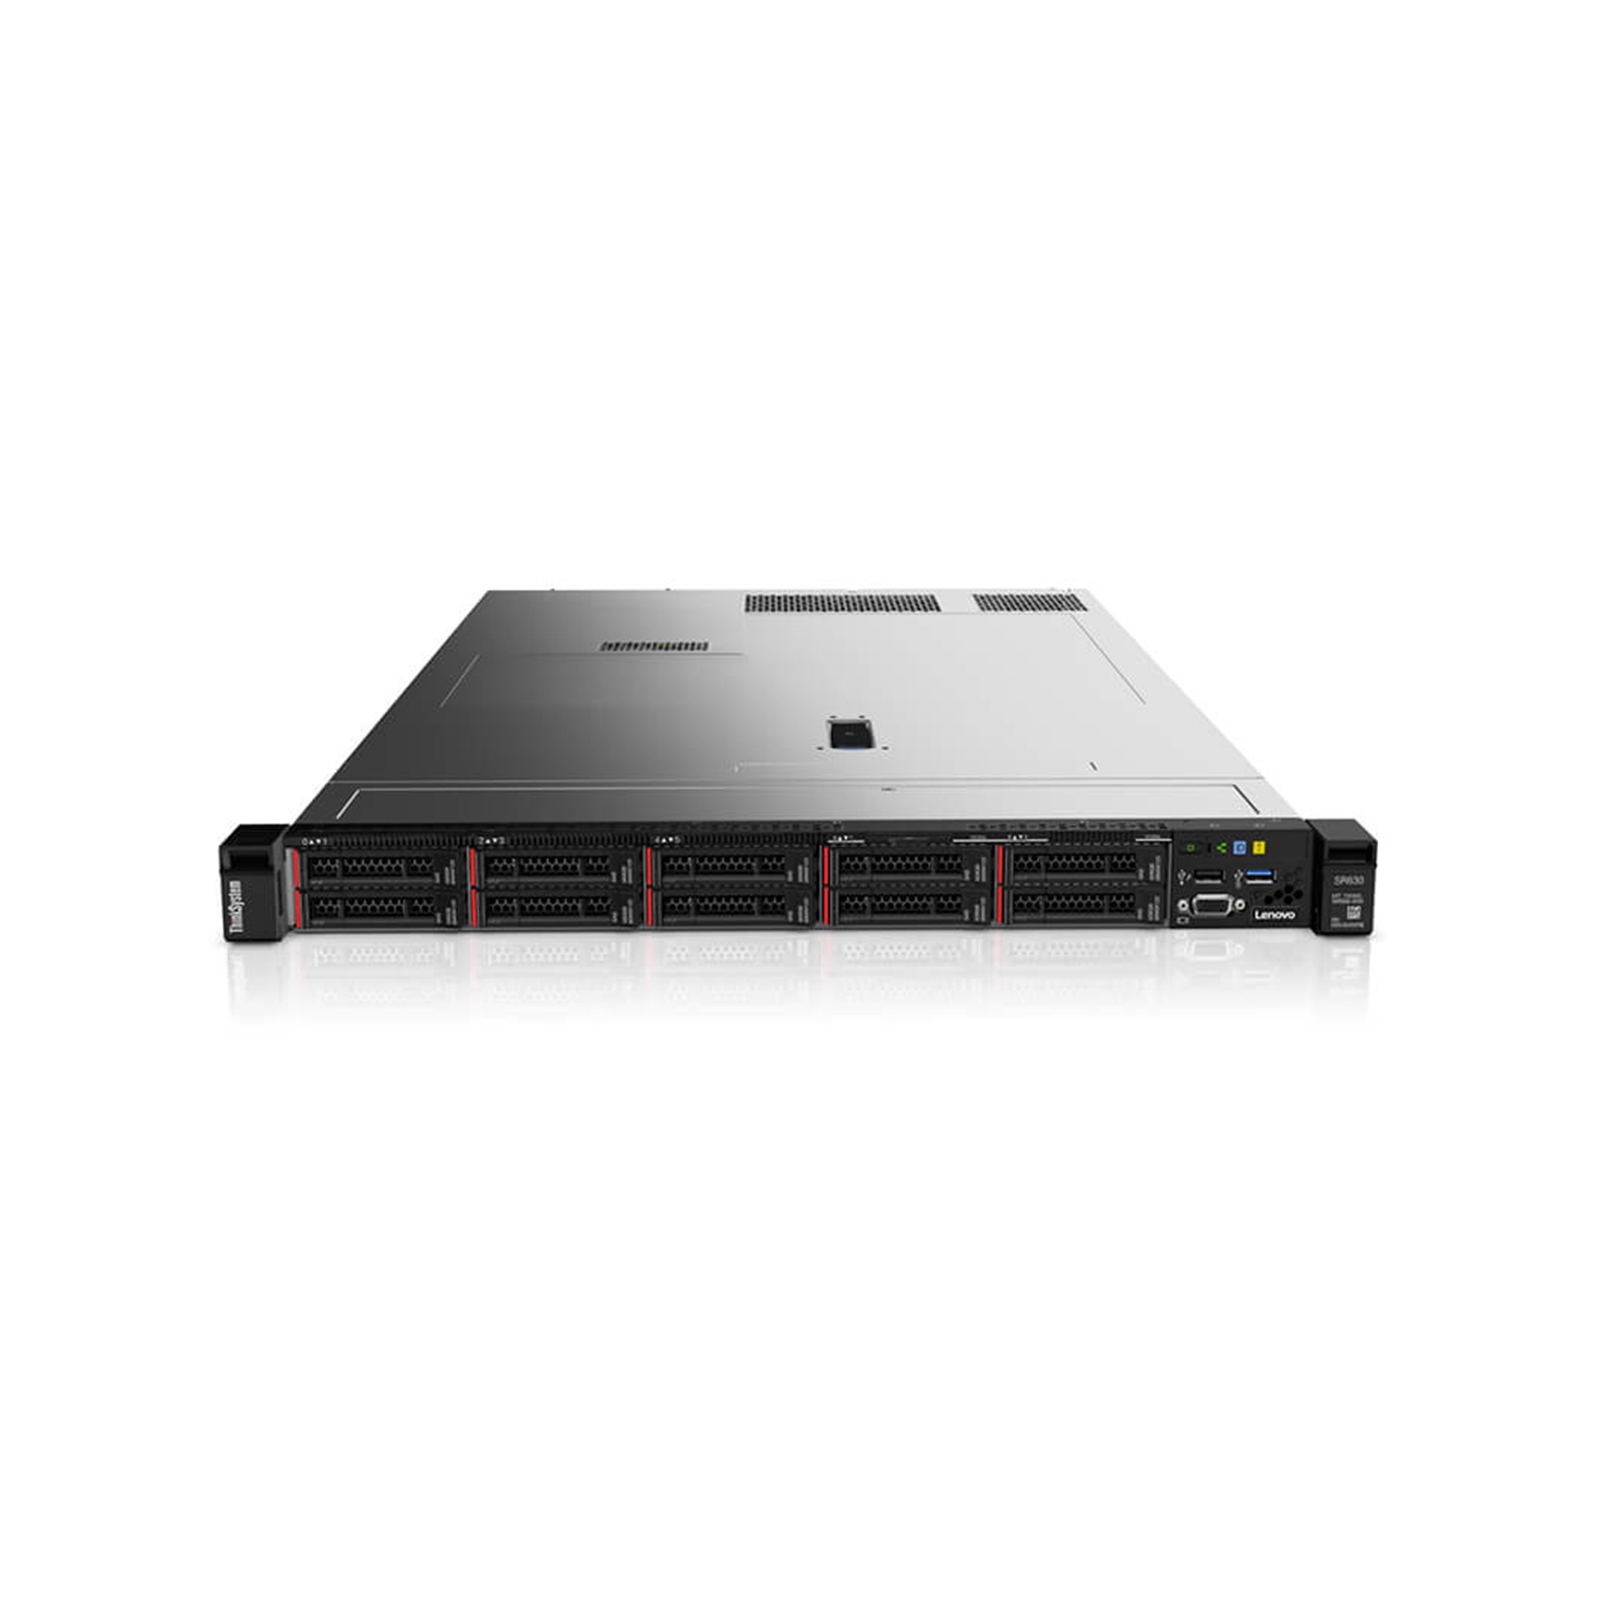 Lenovo rack server